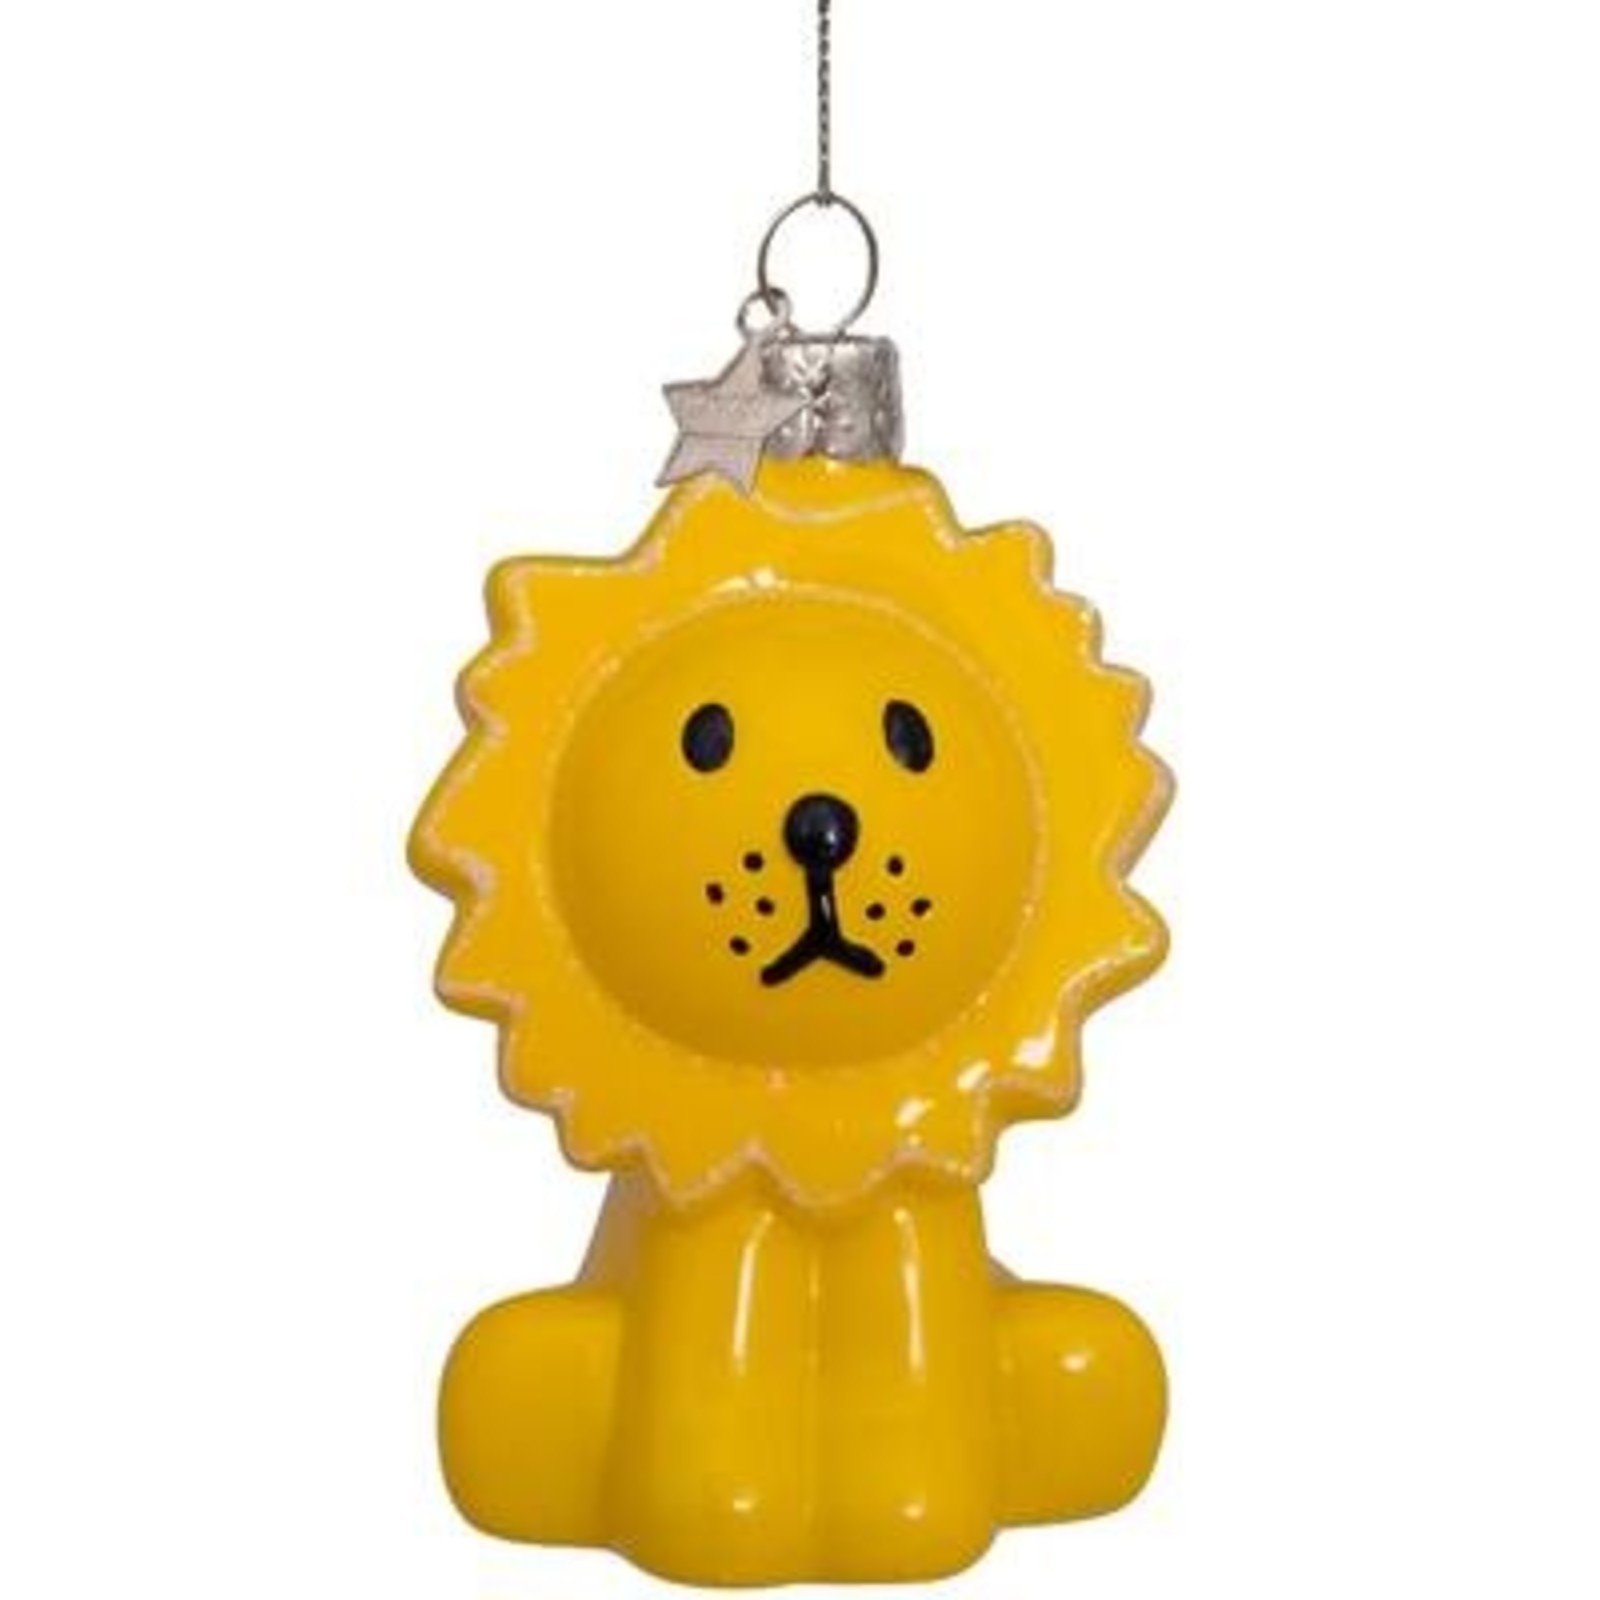 Ornament glass miffy lion 8cm - 3"